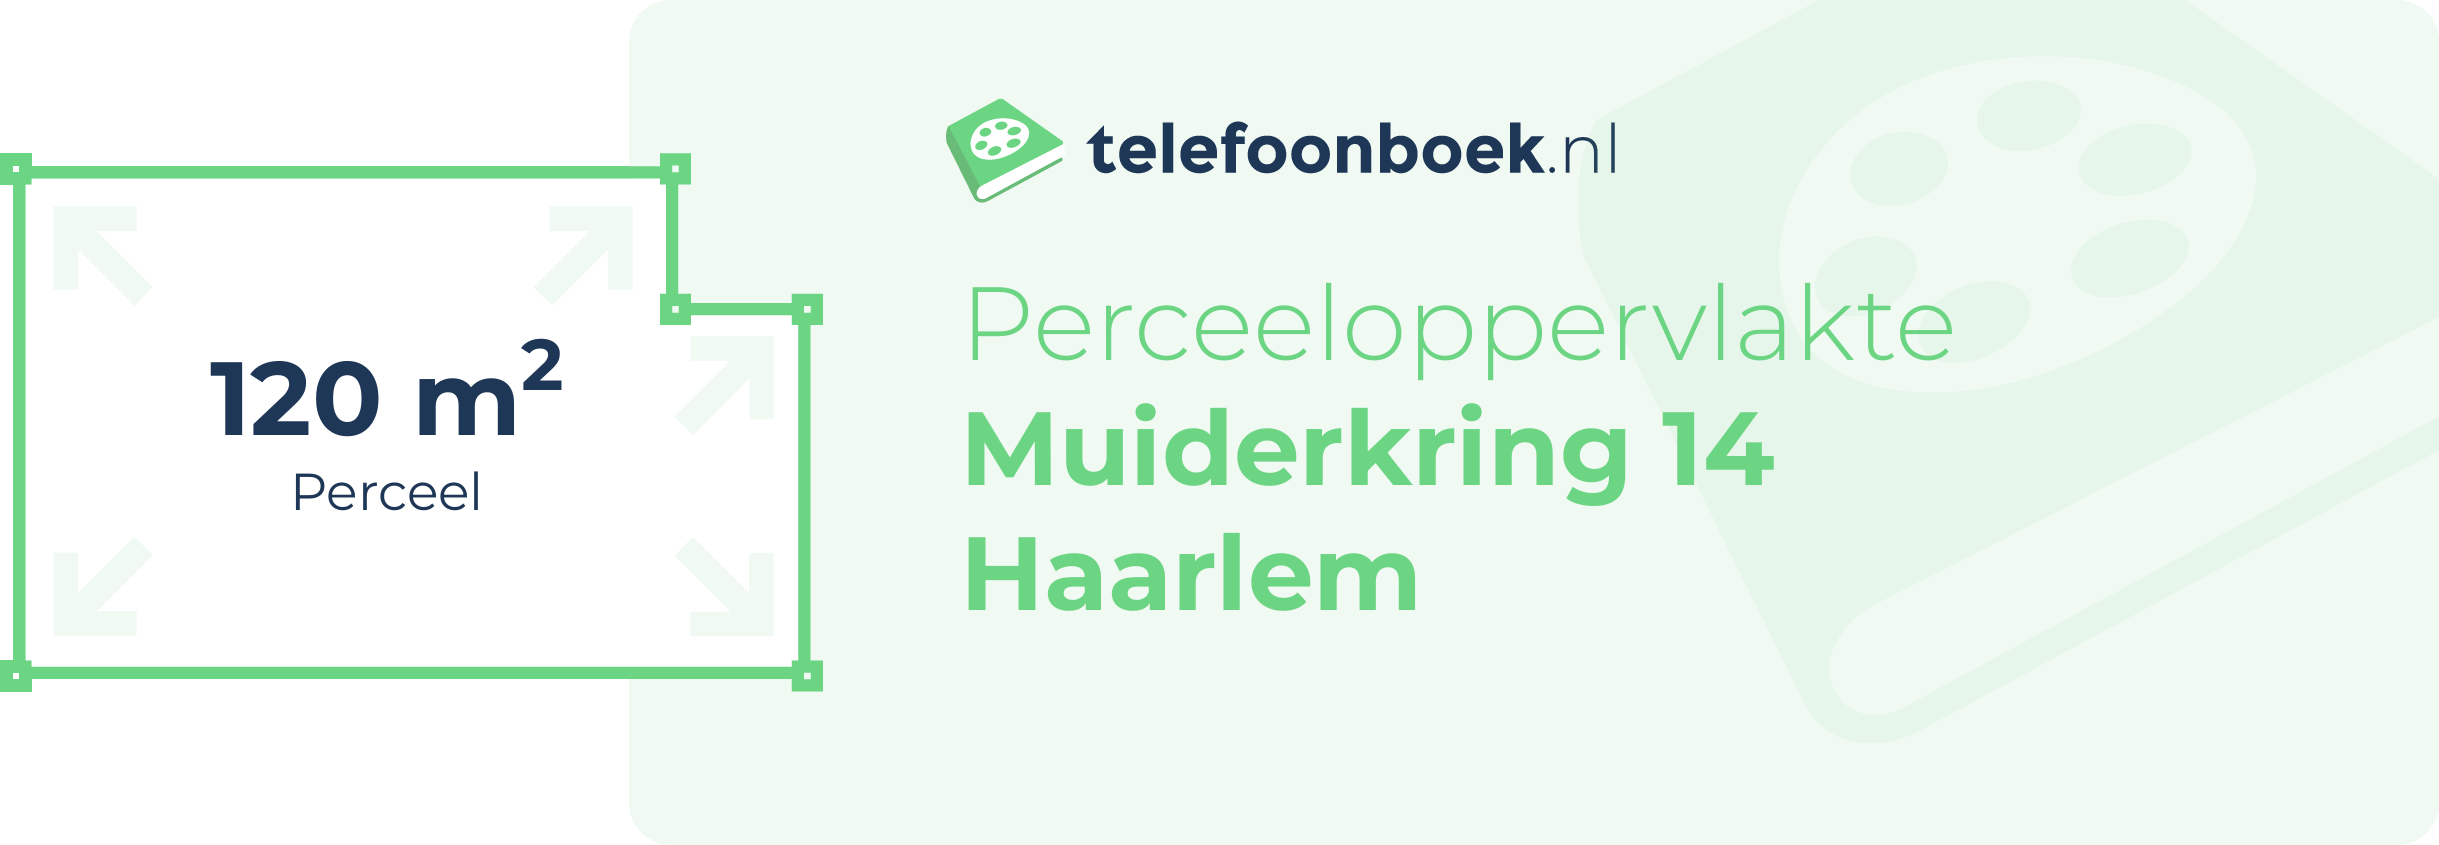 Perceeloppervlakte Muiderkring 14 Haarlem